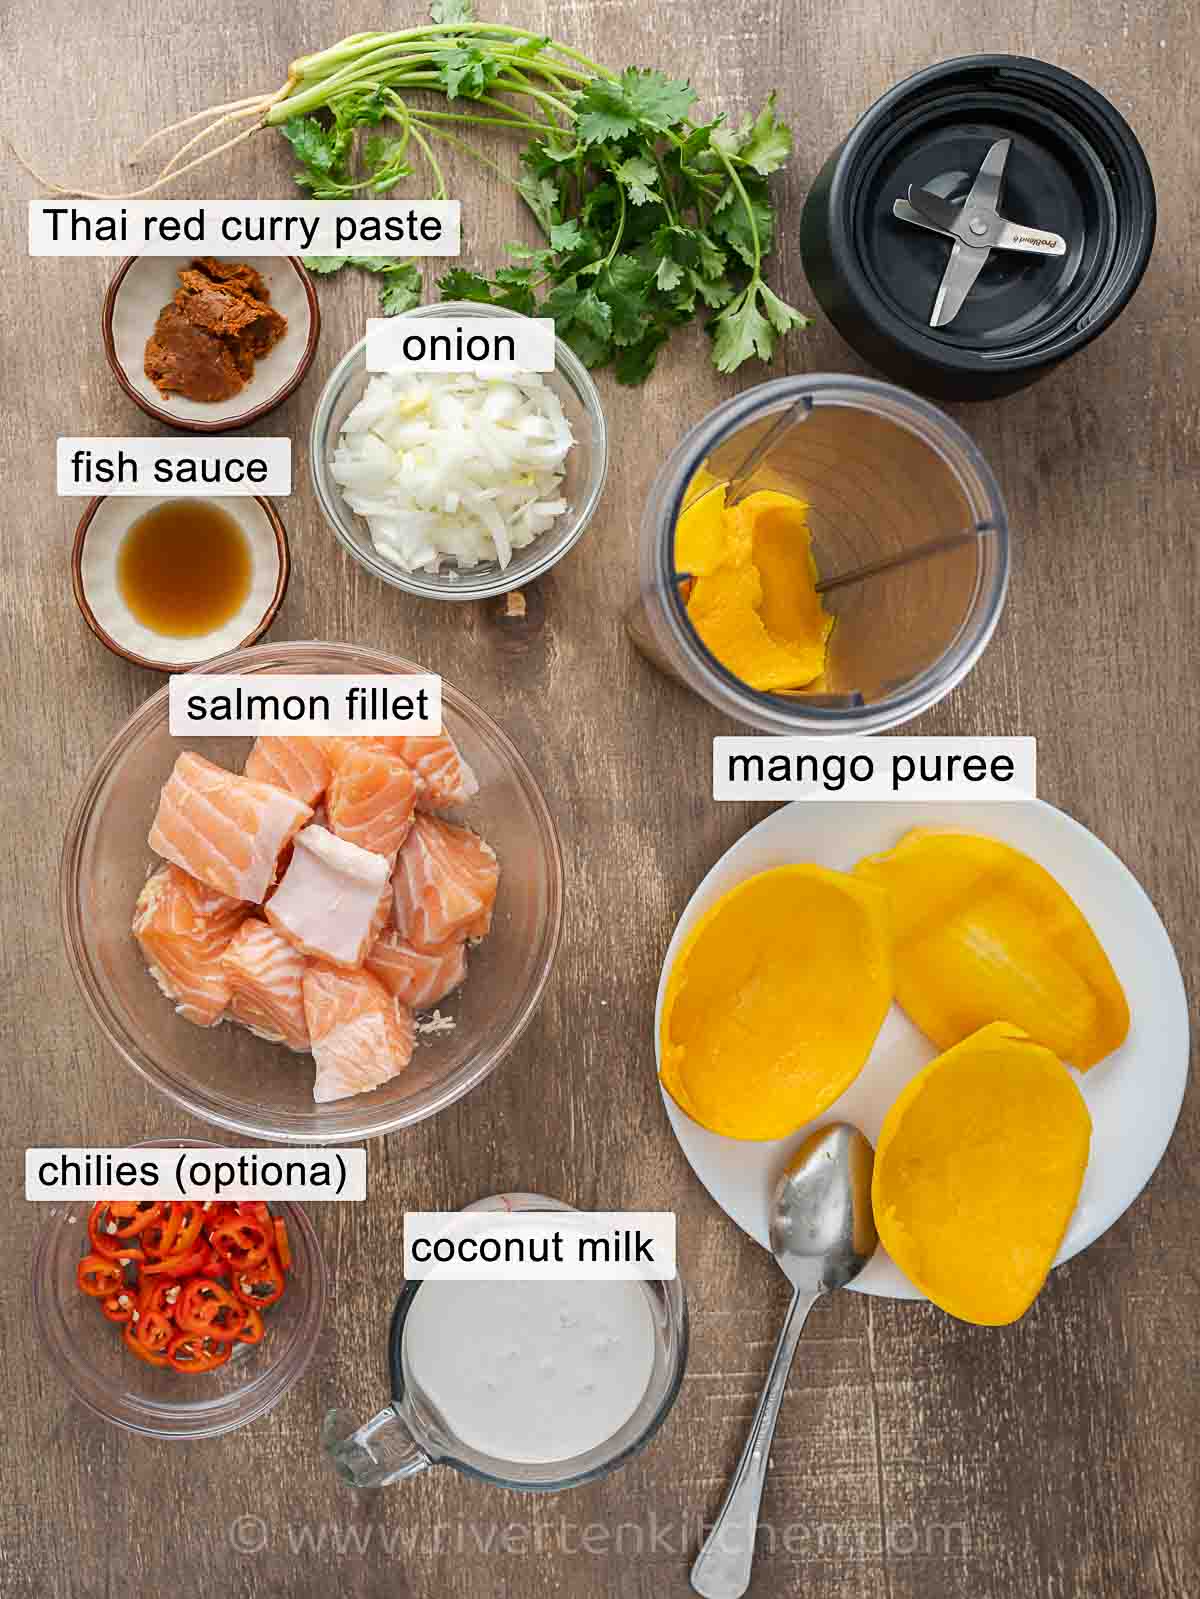 salmon fillet, coconut milk, chilies, fish sauce, mango puree, Thai red curry paste, onion, coriander or cilantro.